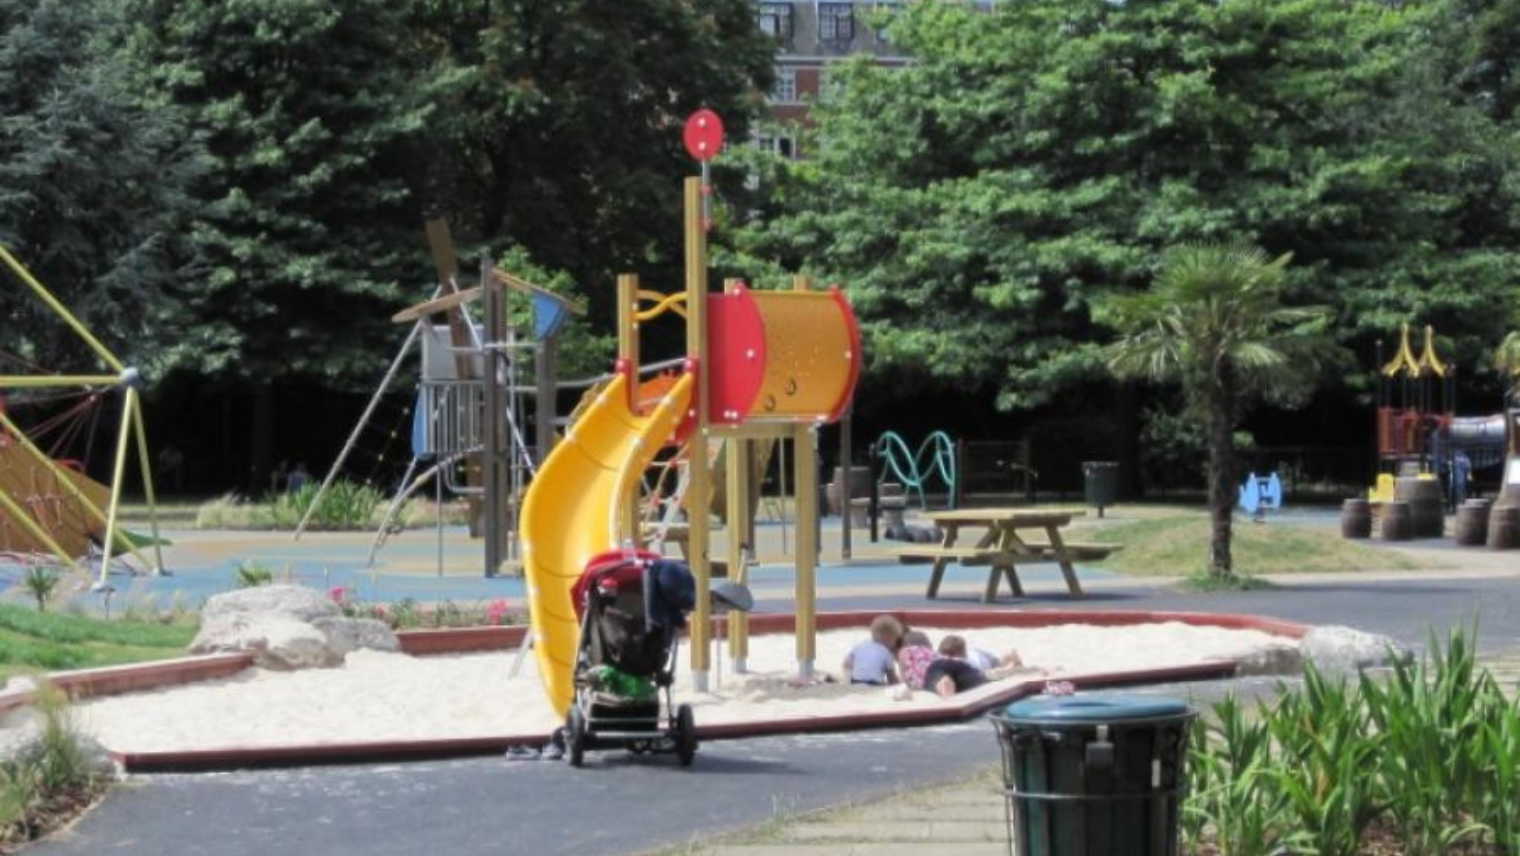 A playground at Archbishop's Park